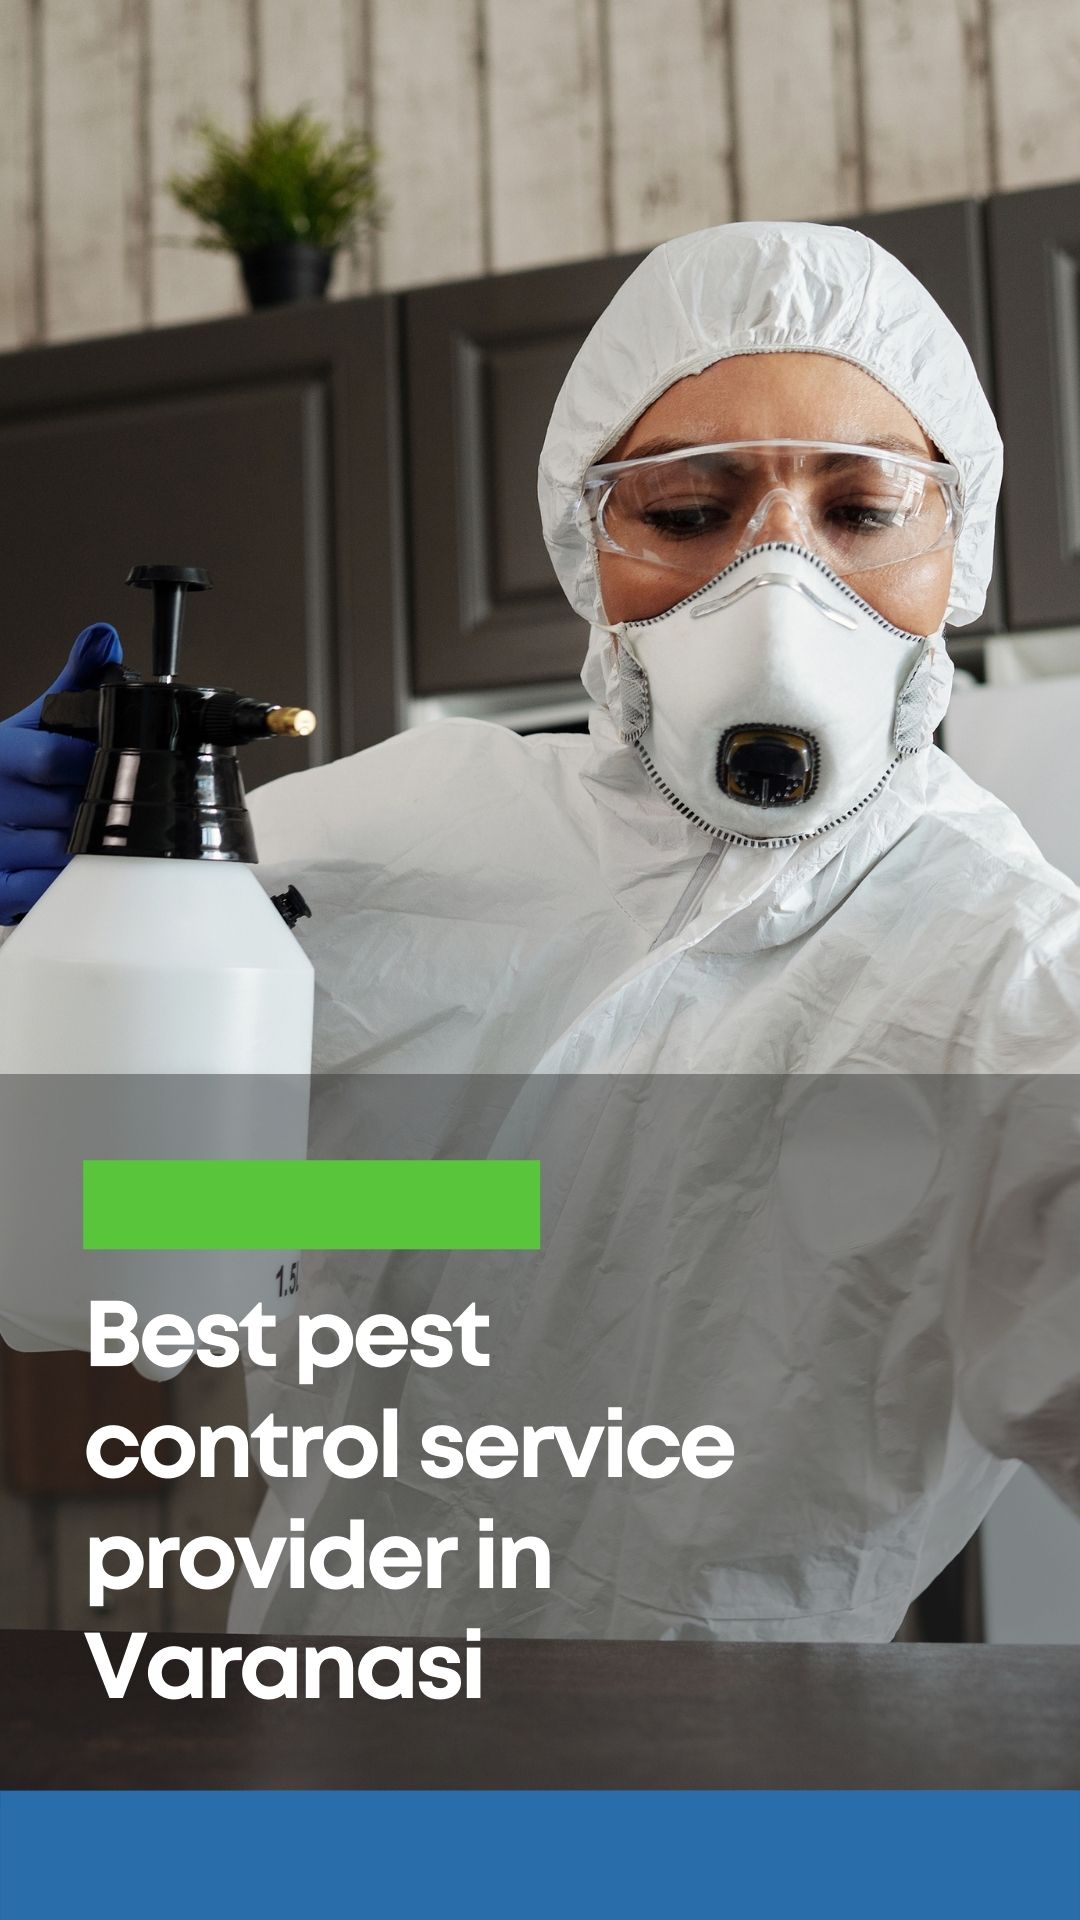 Best pest control service varanasi